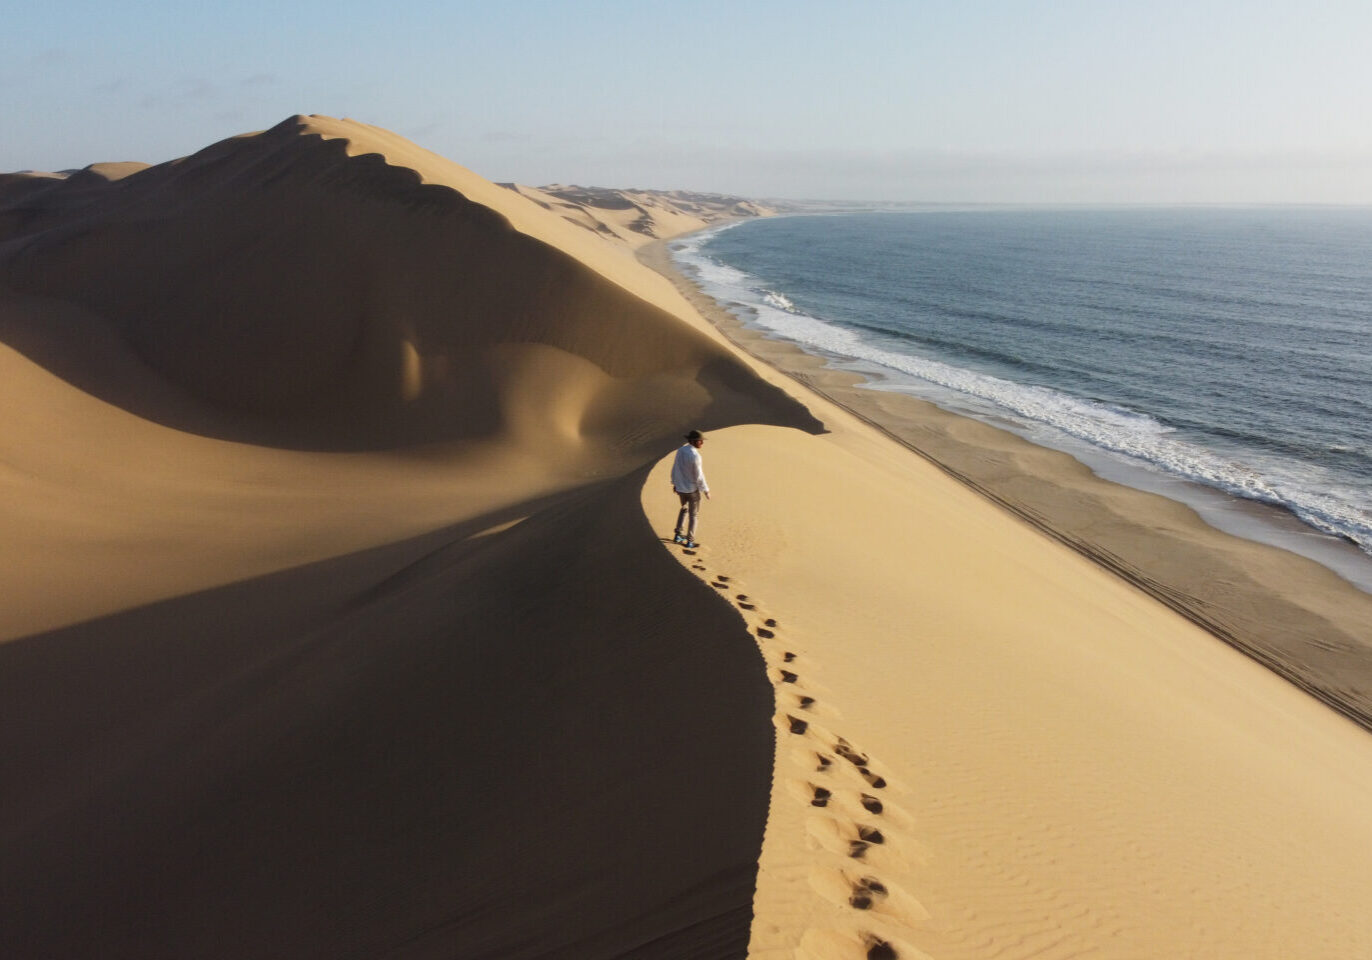 Where the Namib Desert meets the Atlantic Ocean